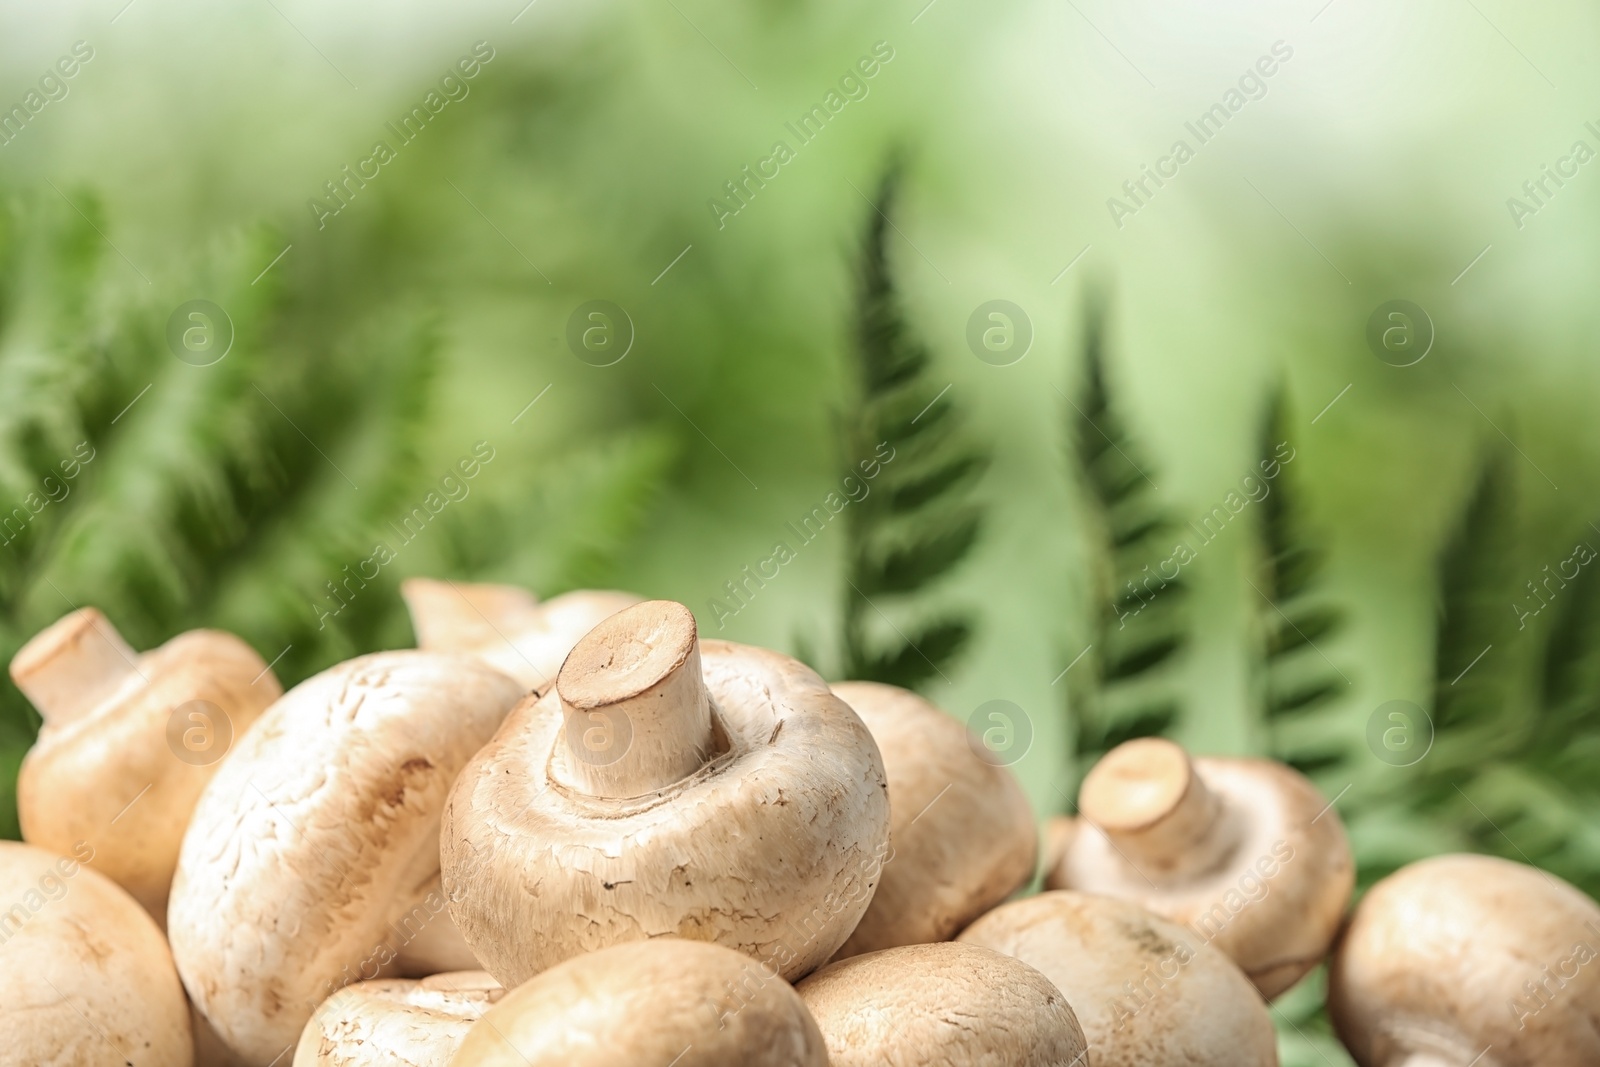 Photo of Fresh champignon mushrooms on blurred background, closeup view